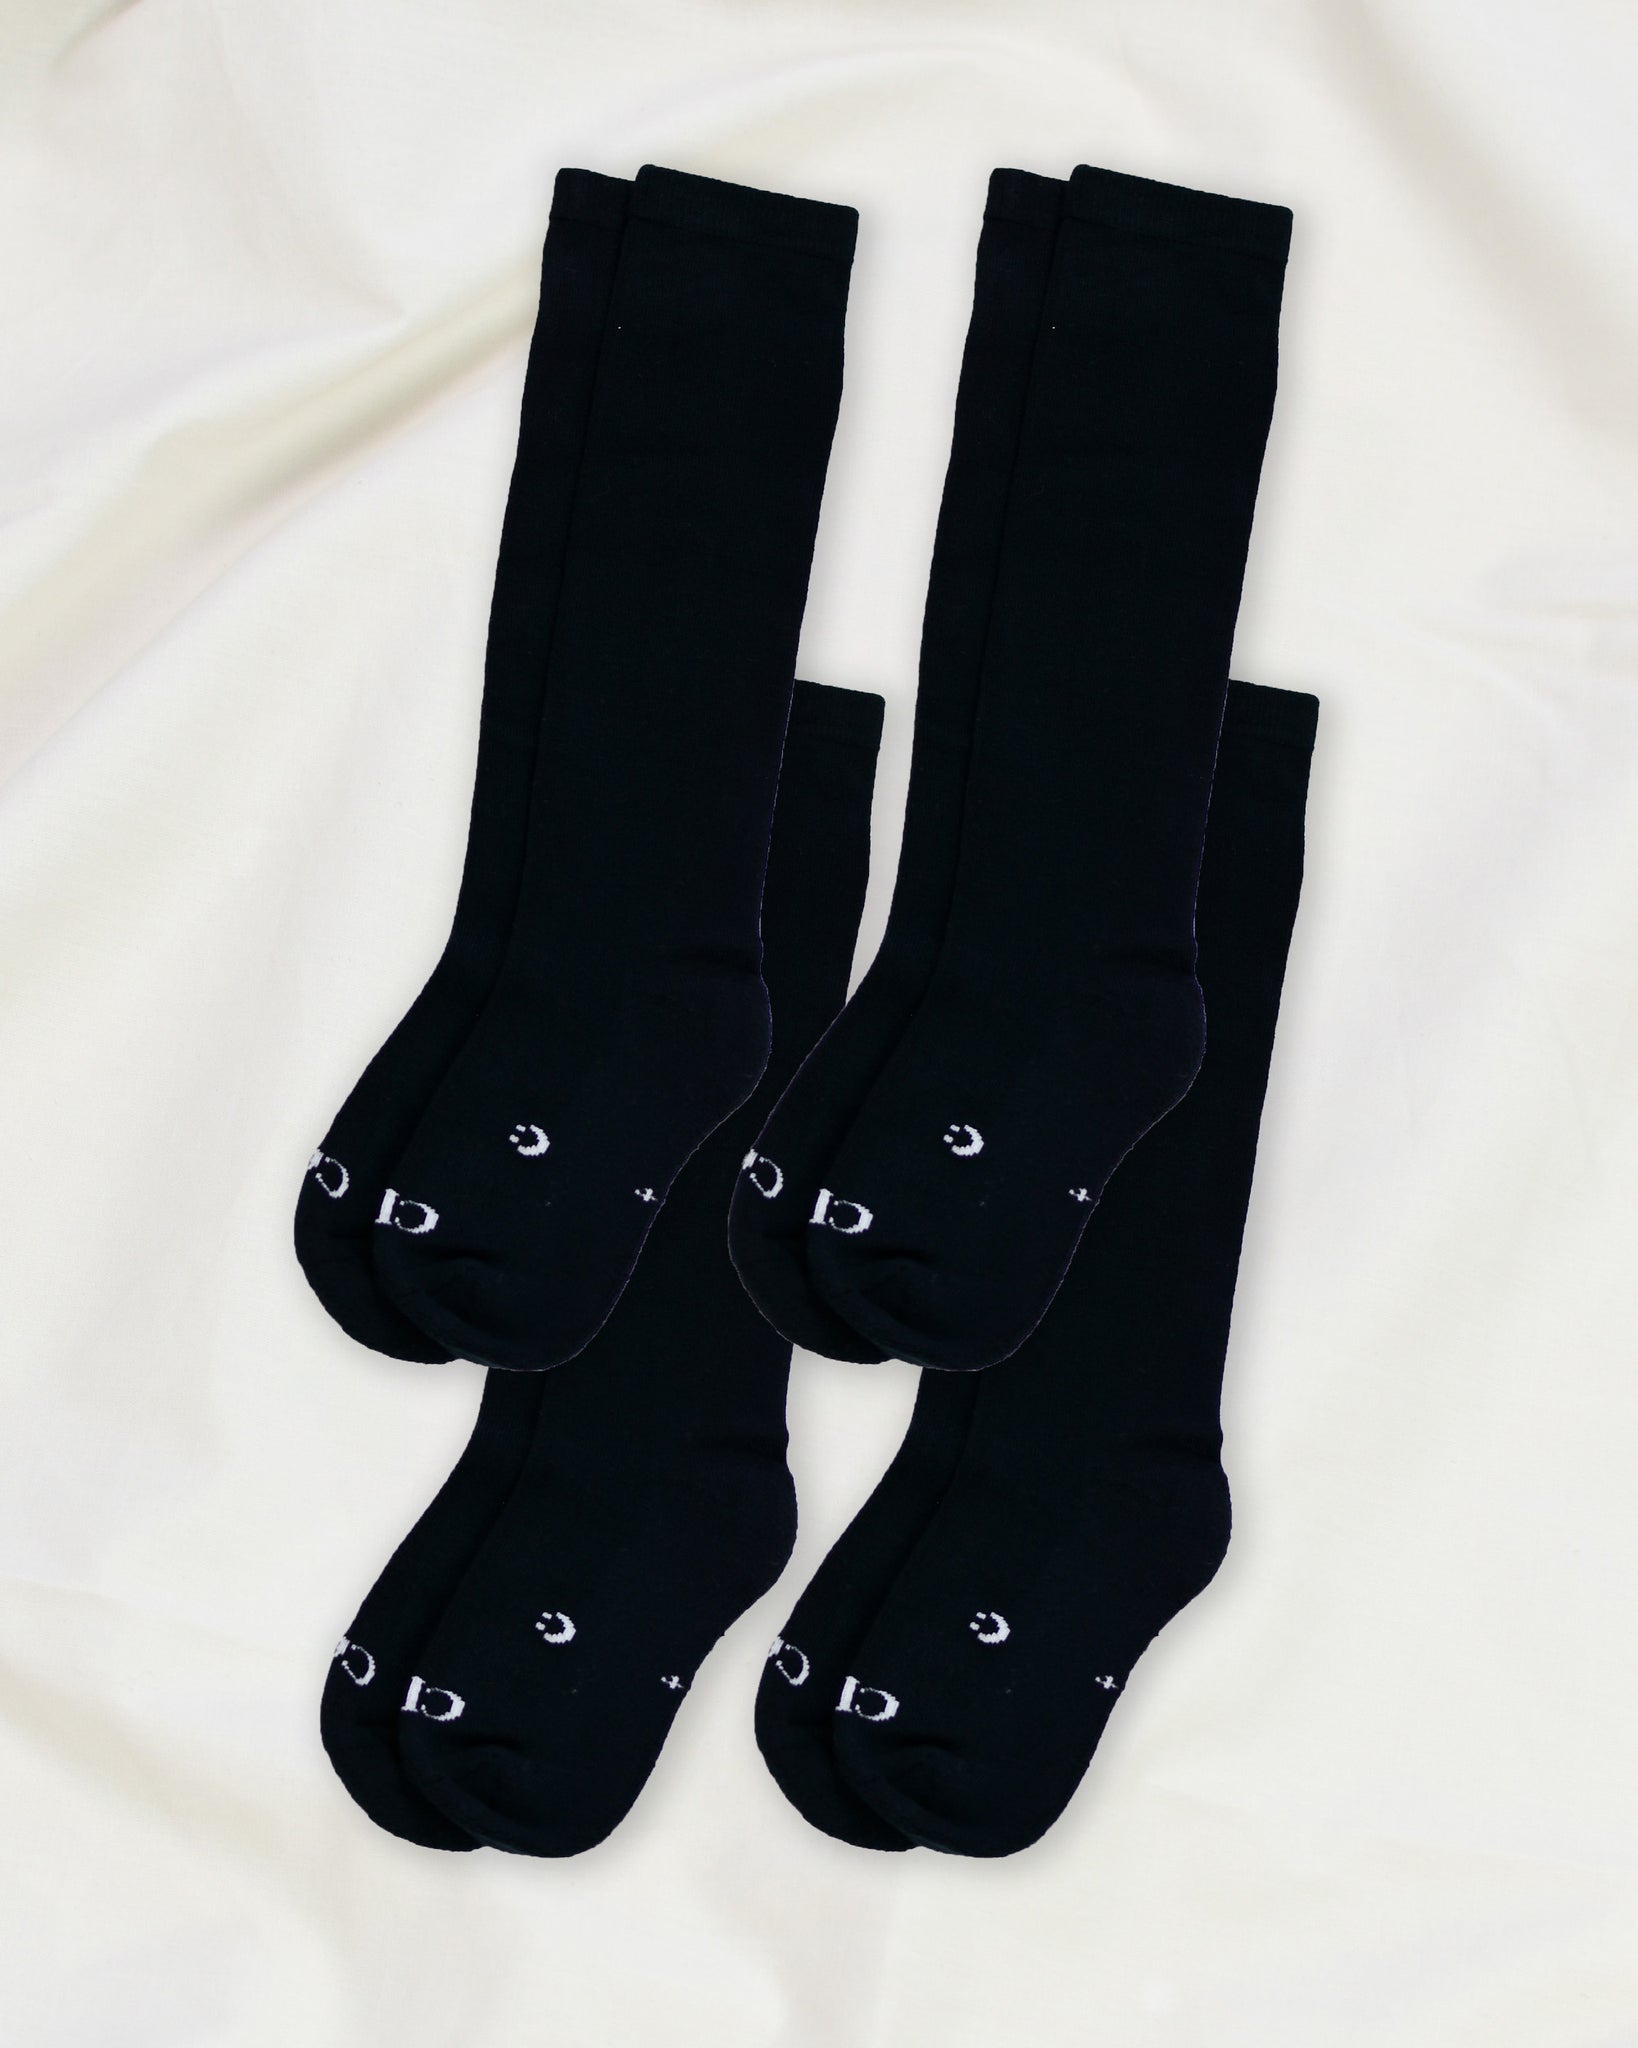 Everyday Knee-High Seamless Feel Socks 4 Pack (Kids) - Black